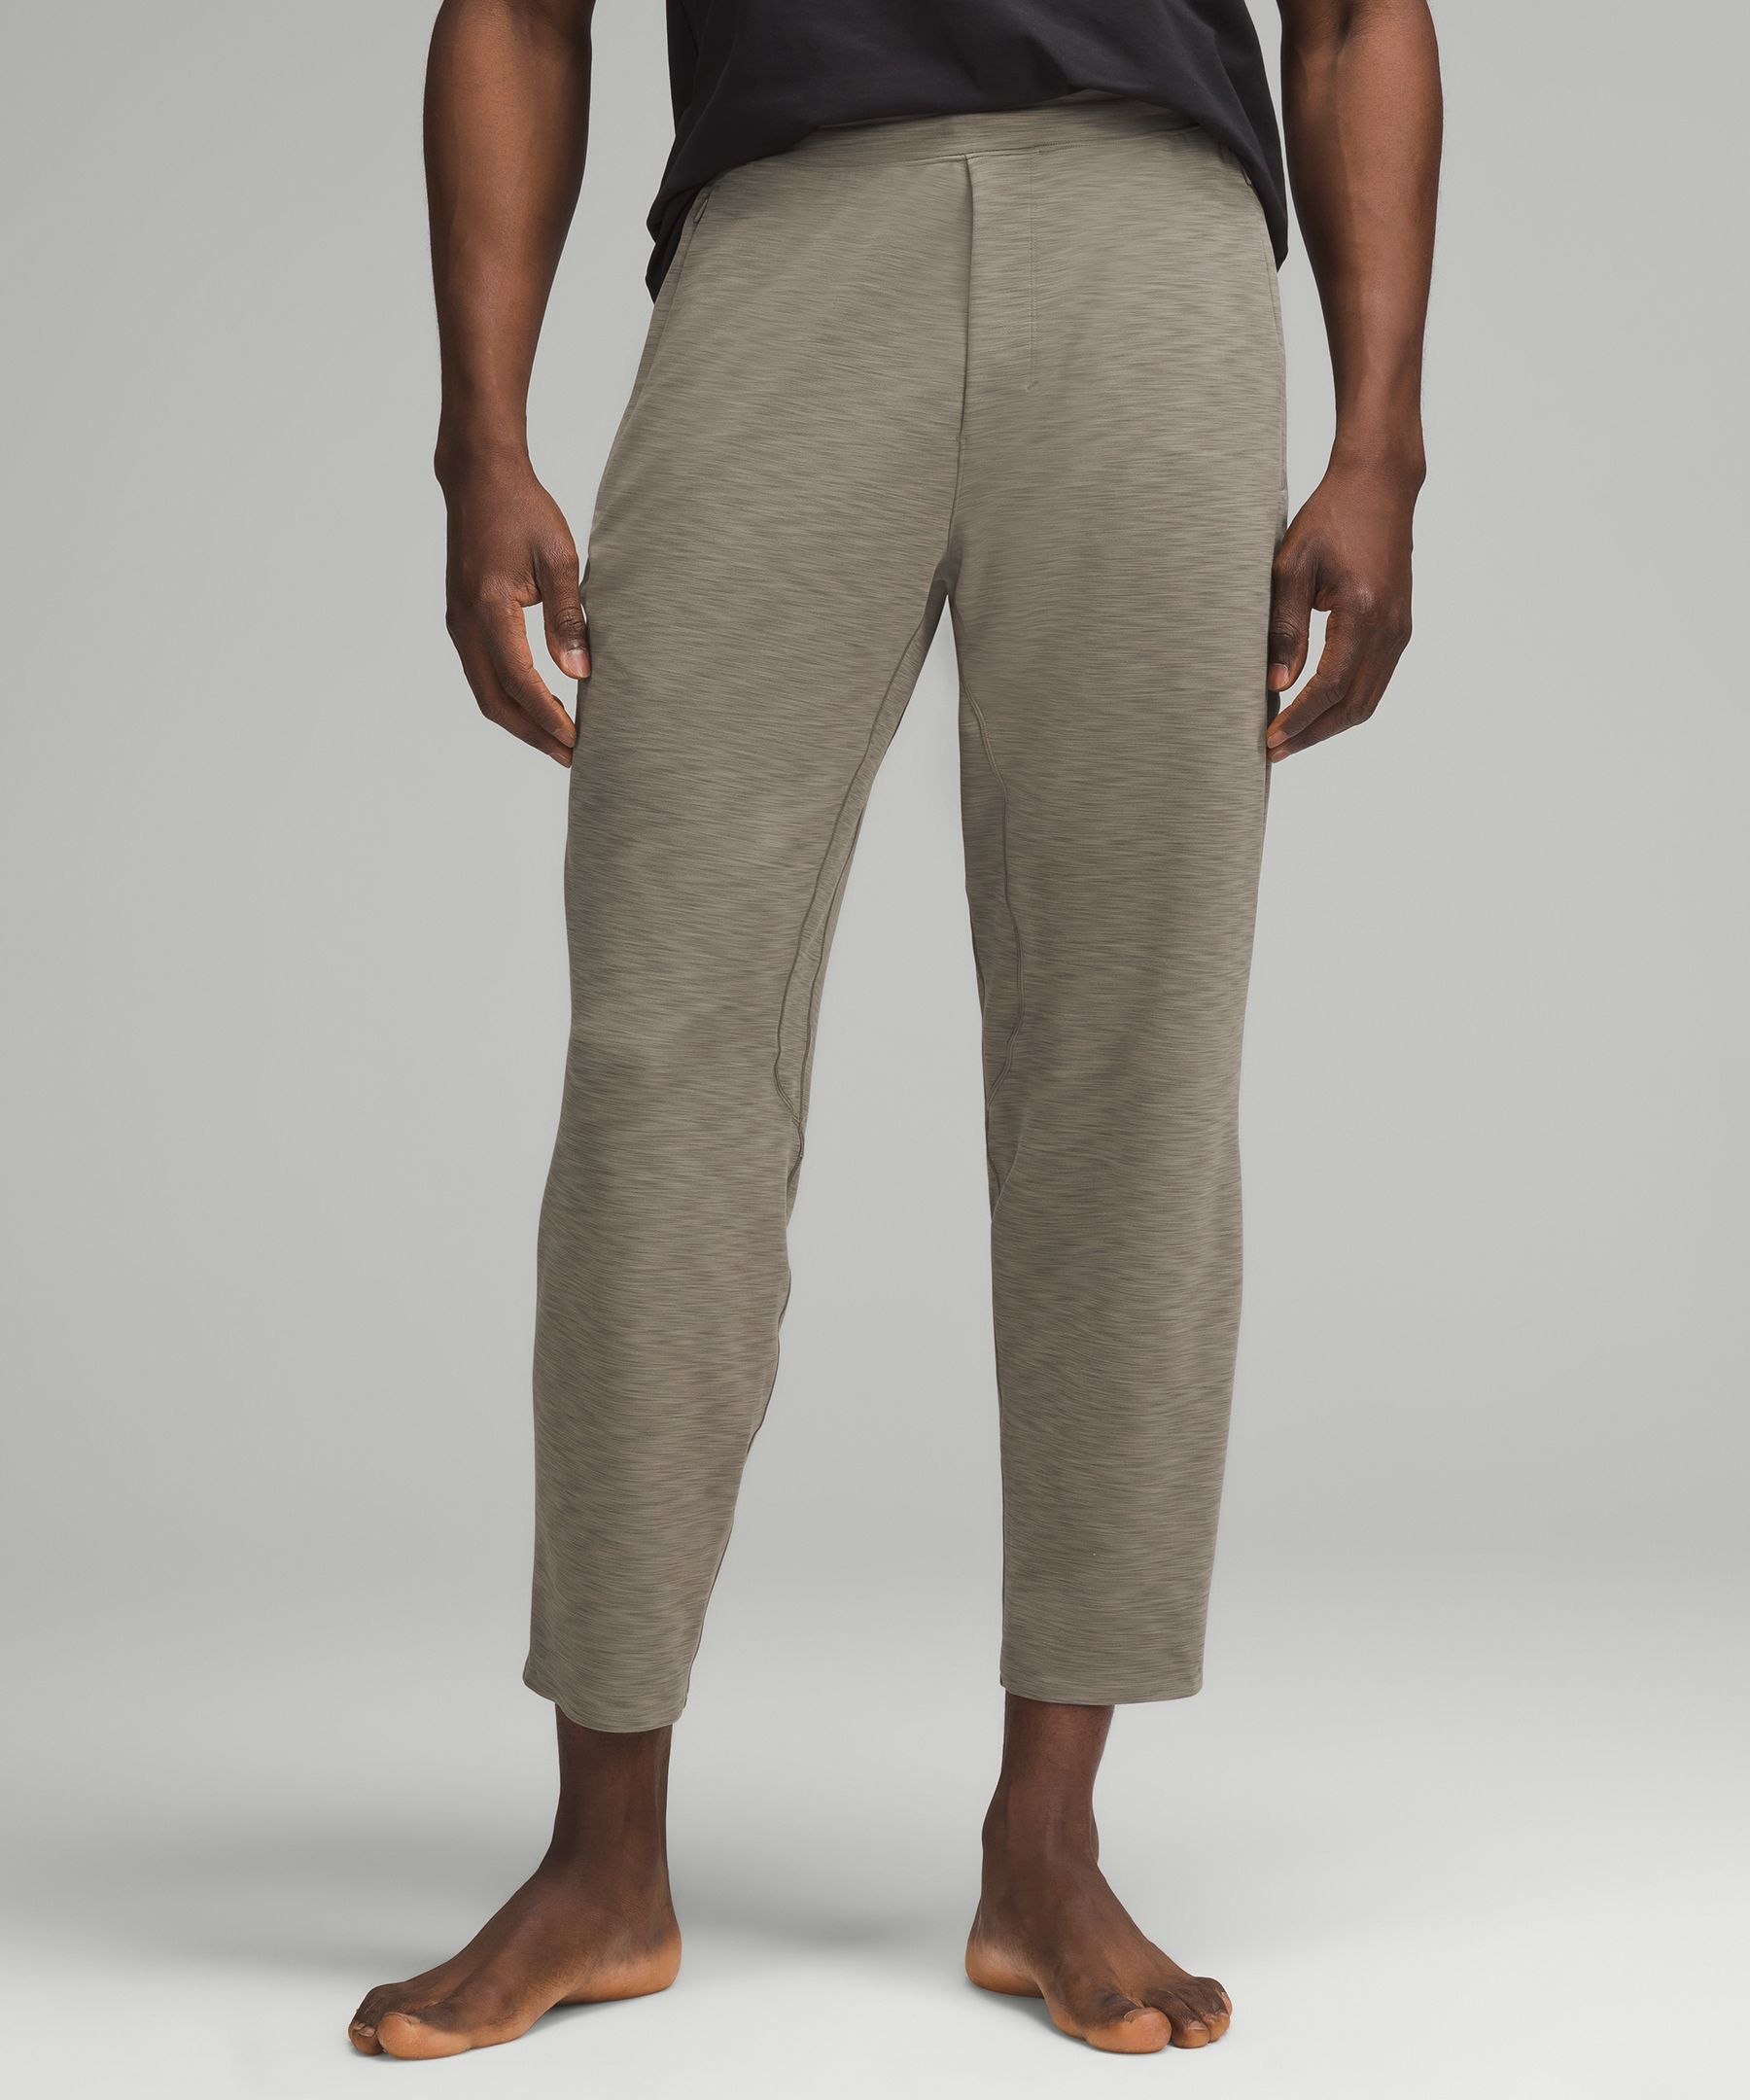 Balancer Cropped Pant 22, Men's Joggers